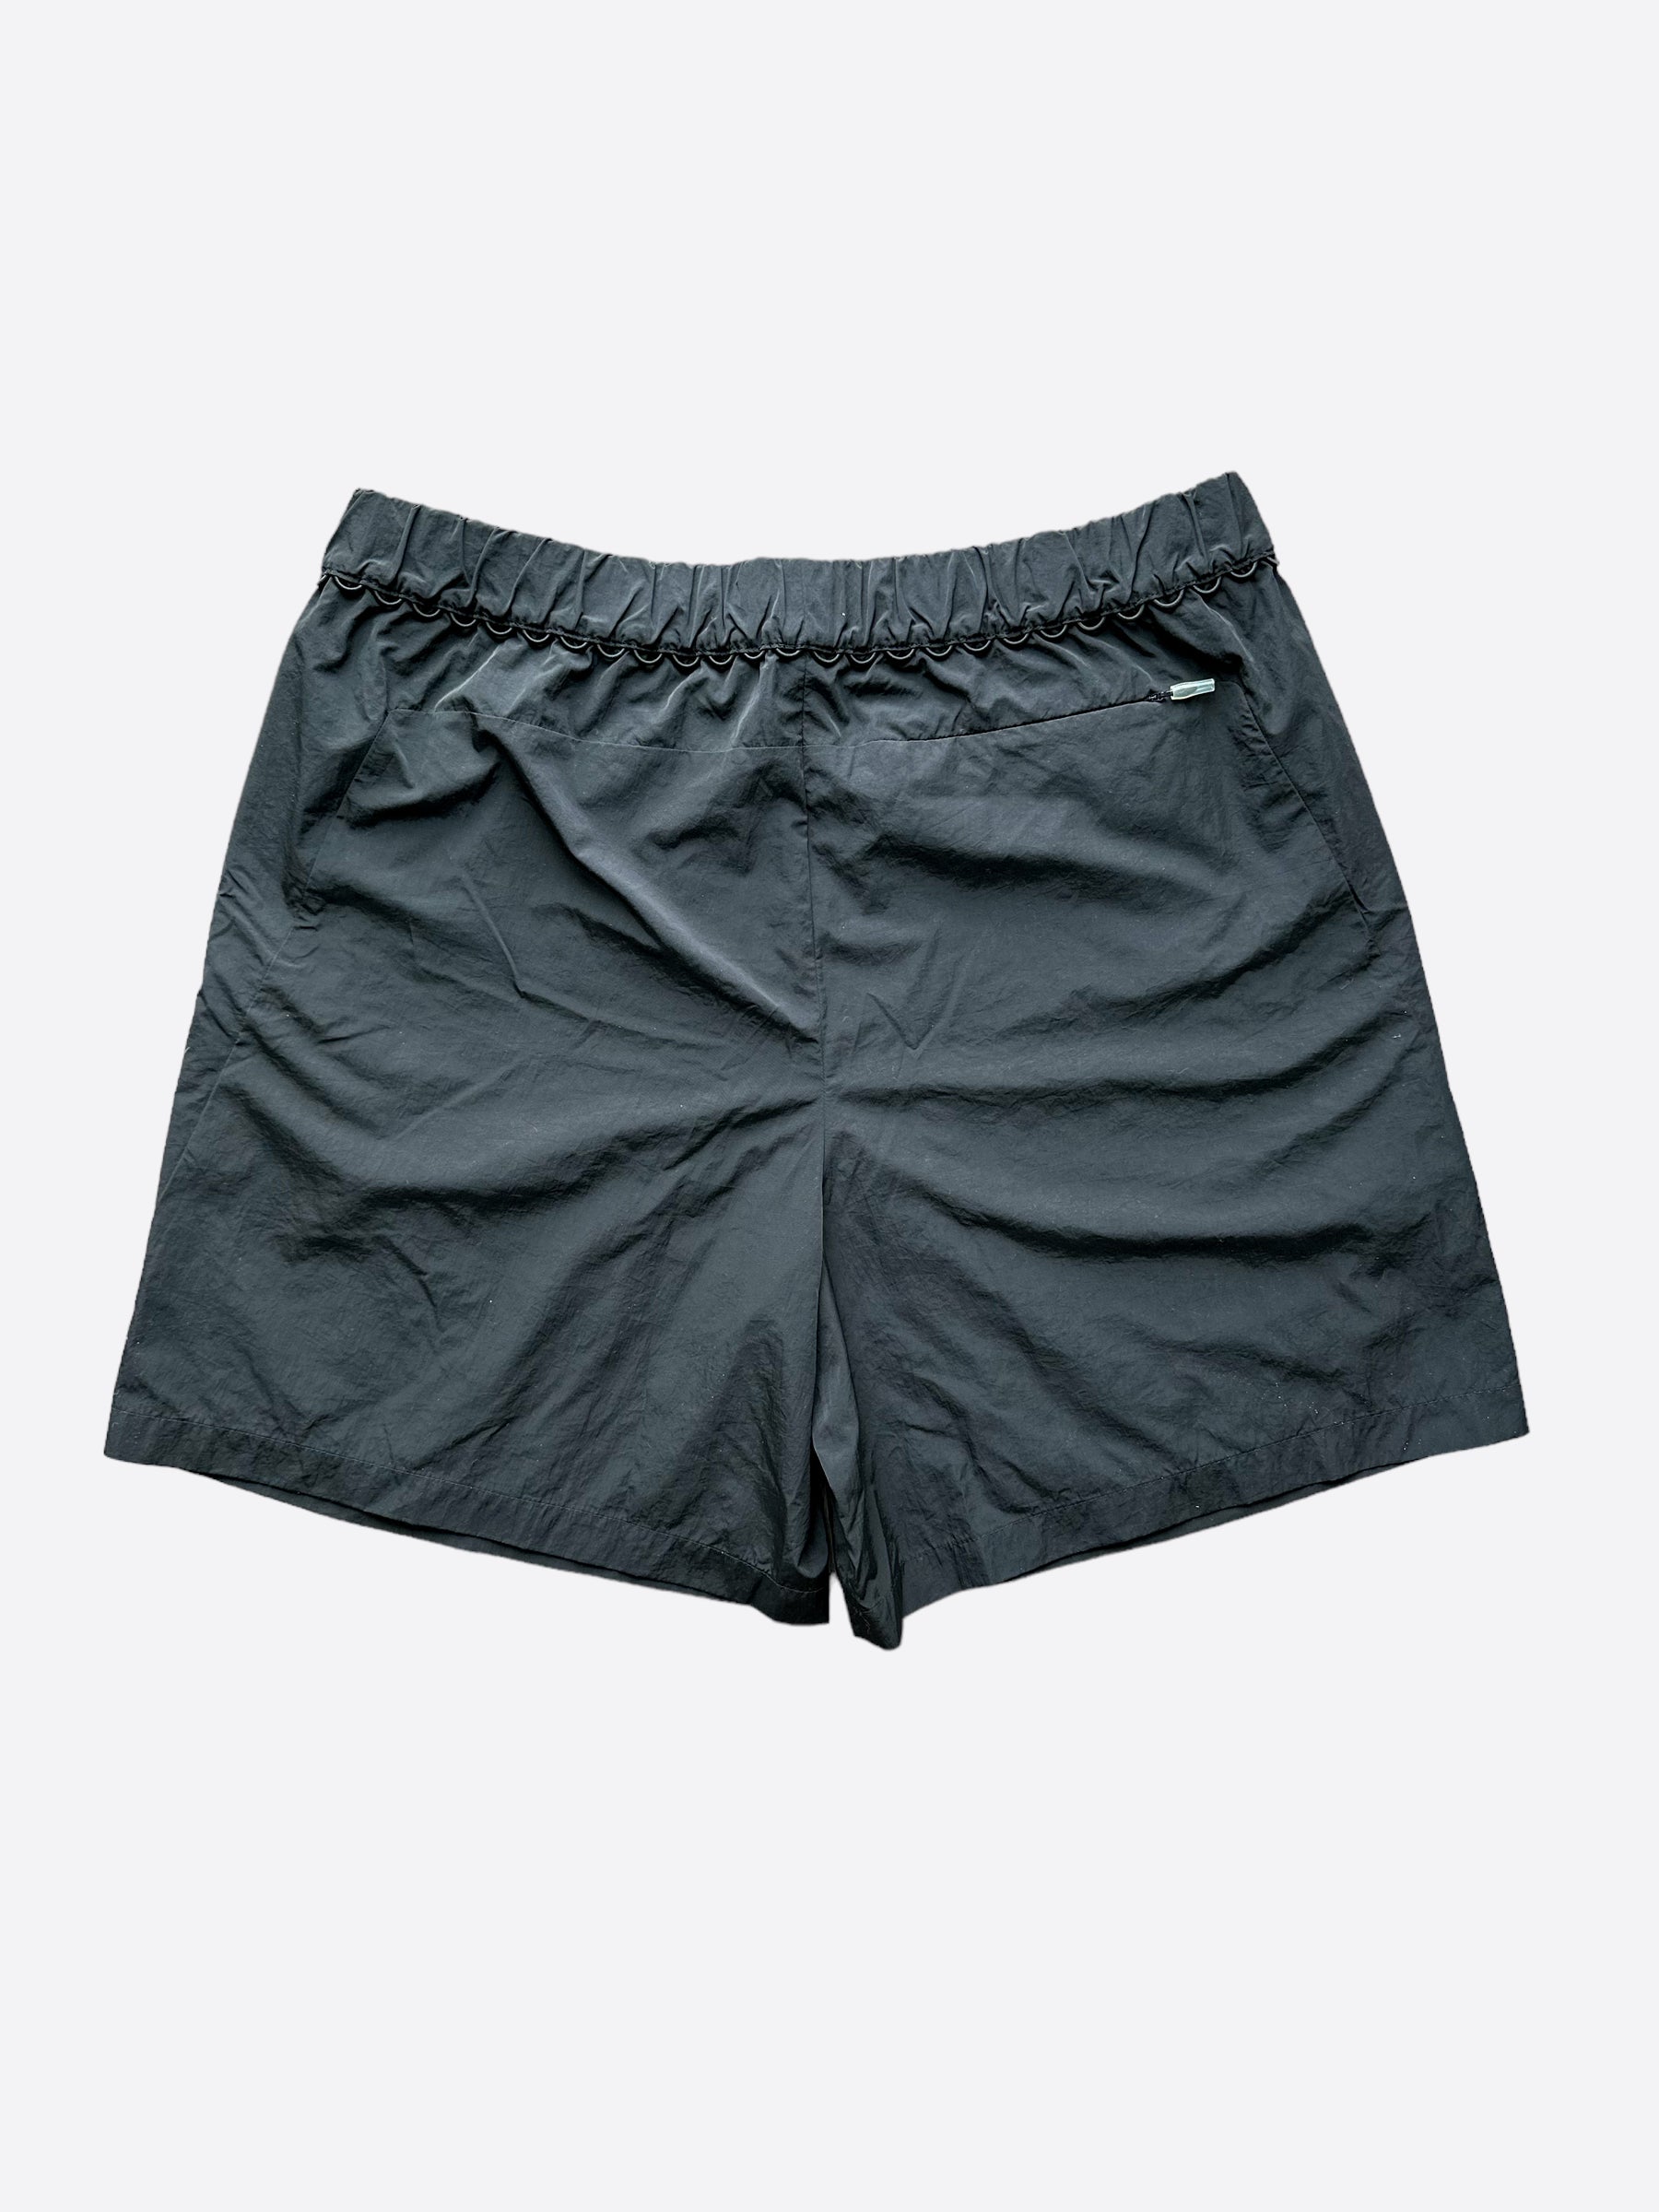 Shorts, Custom Louis Vuitton Va Print Blue Athletic Gym Mesh Shorts Size  3xl